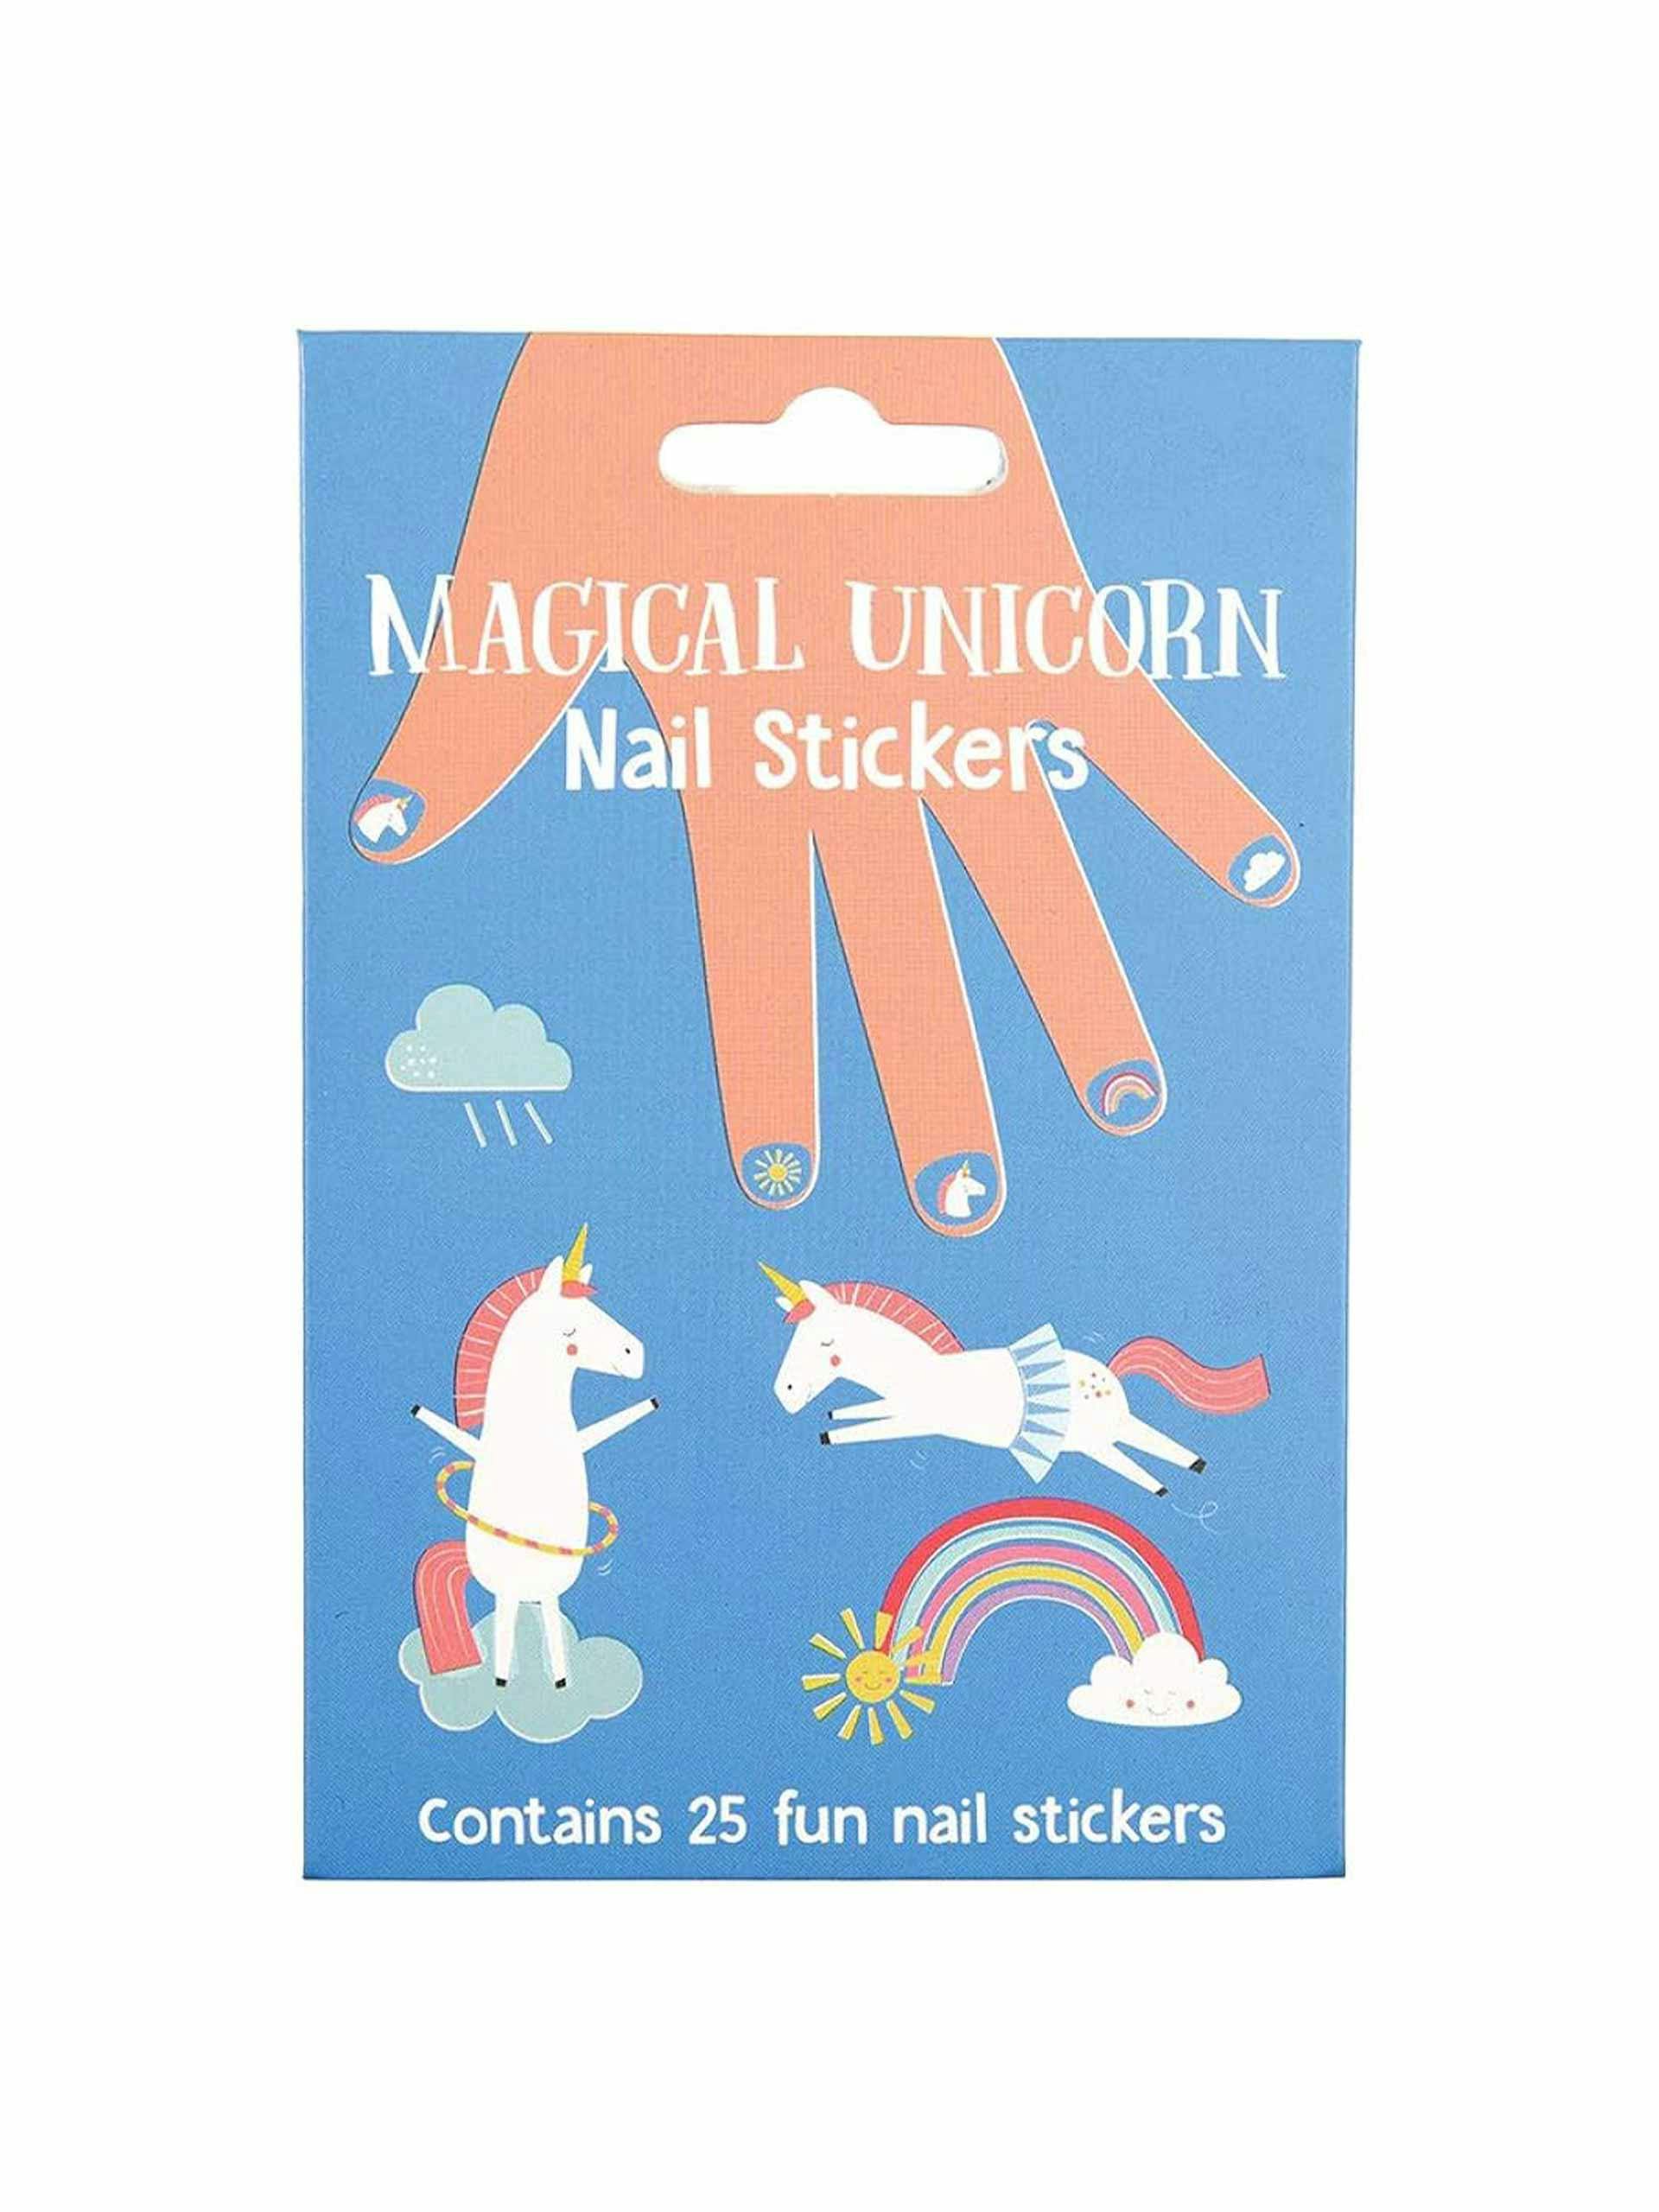 Magical unicorn nail stickers